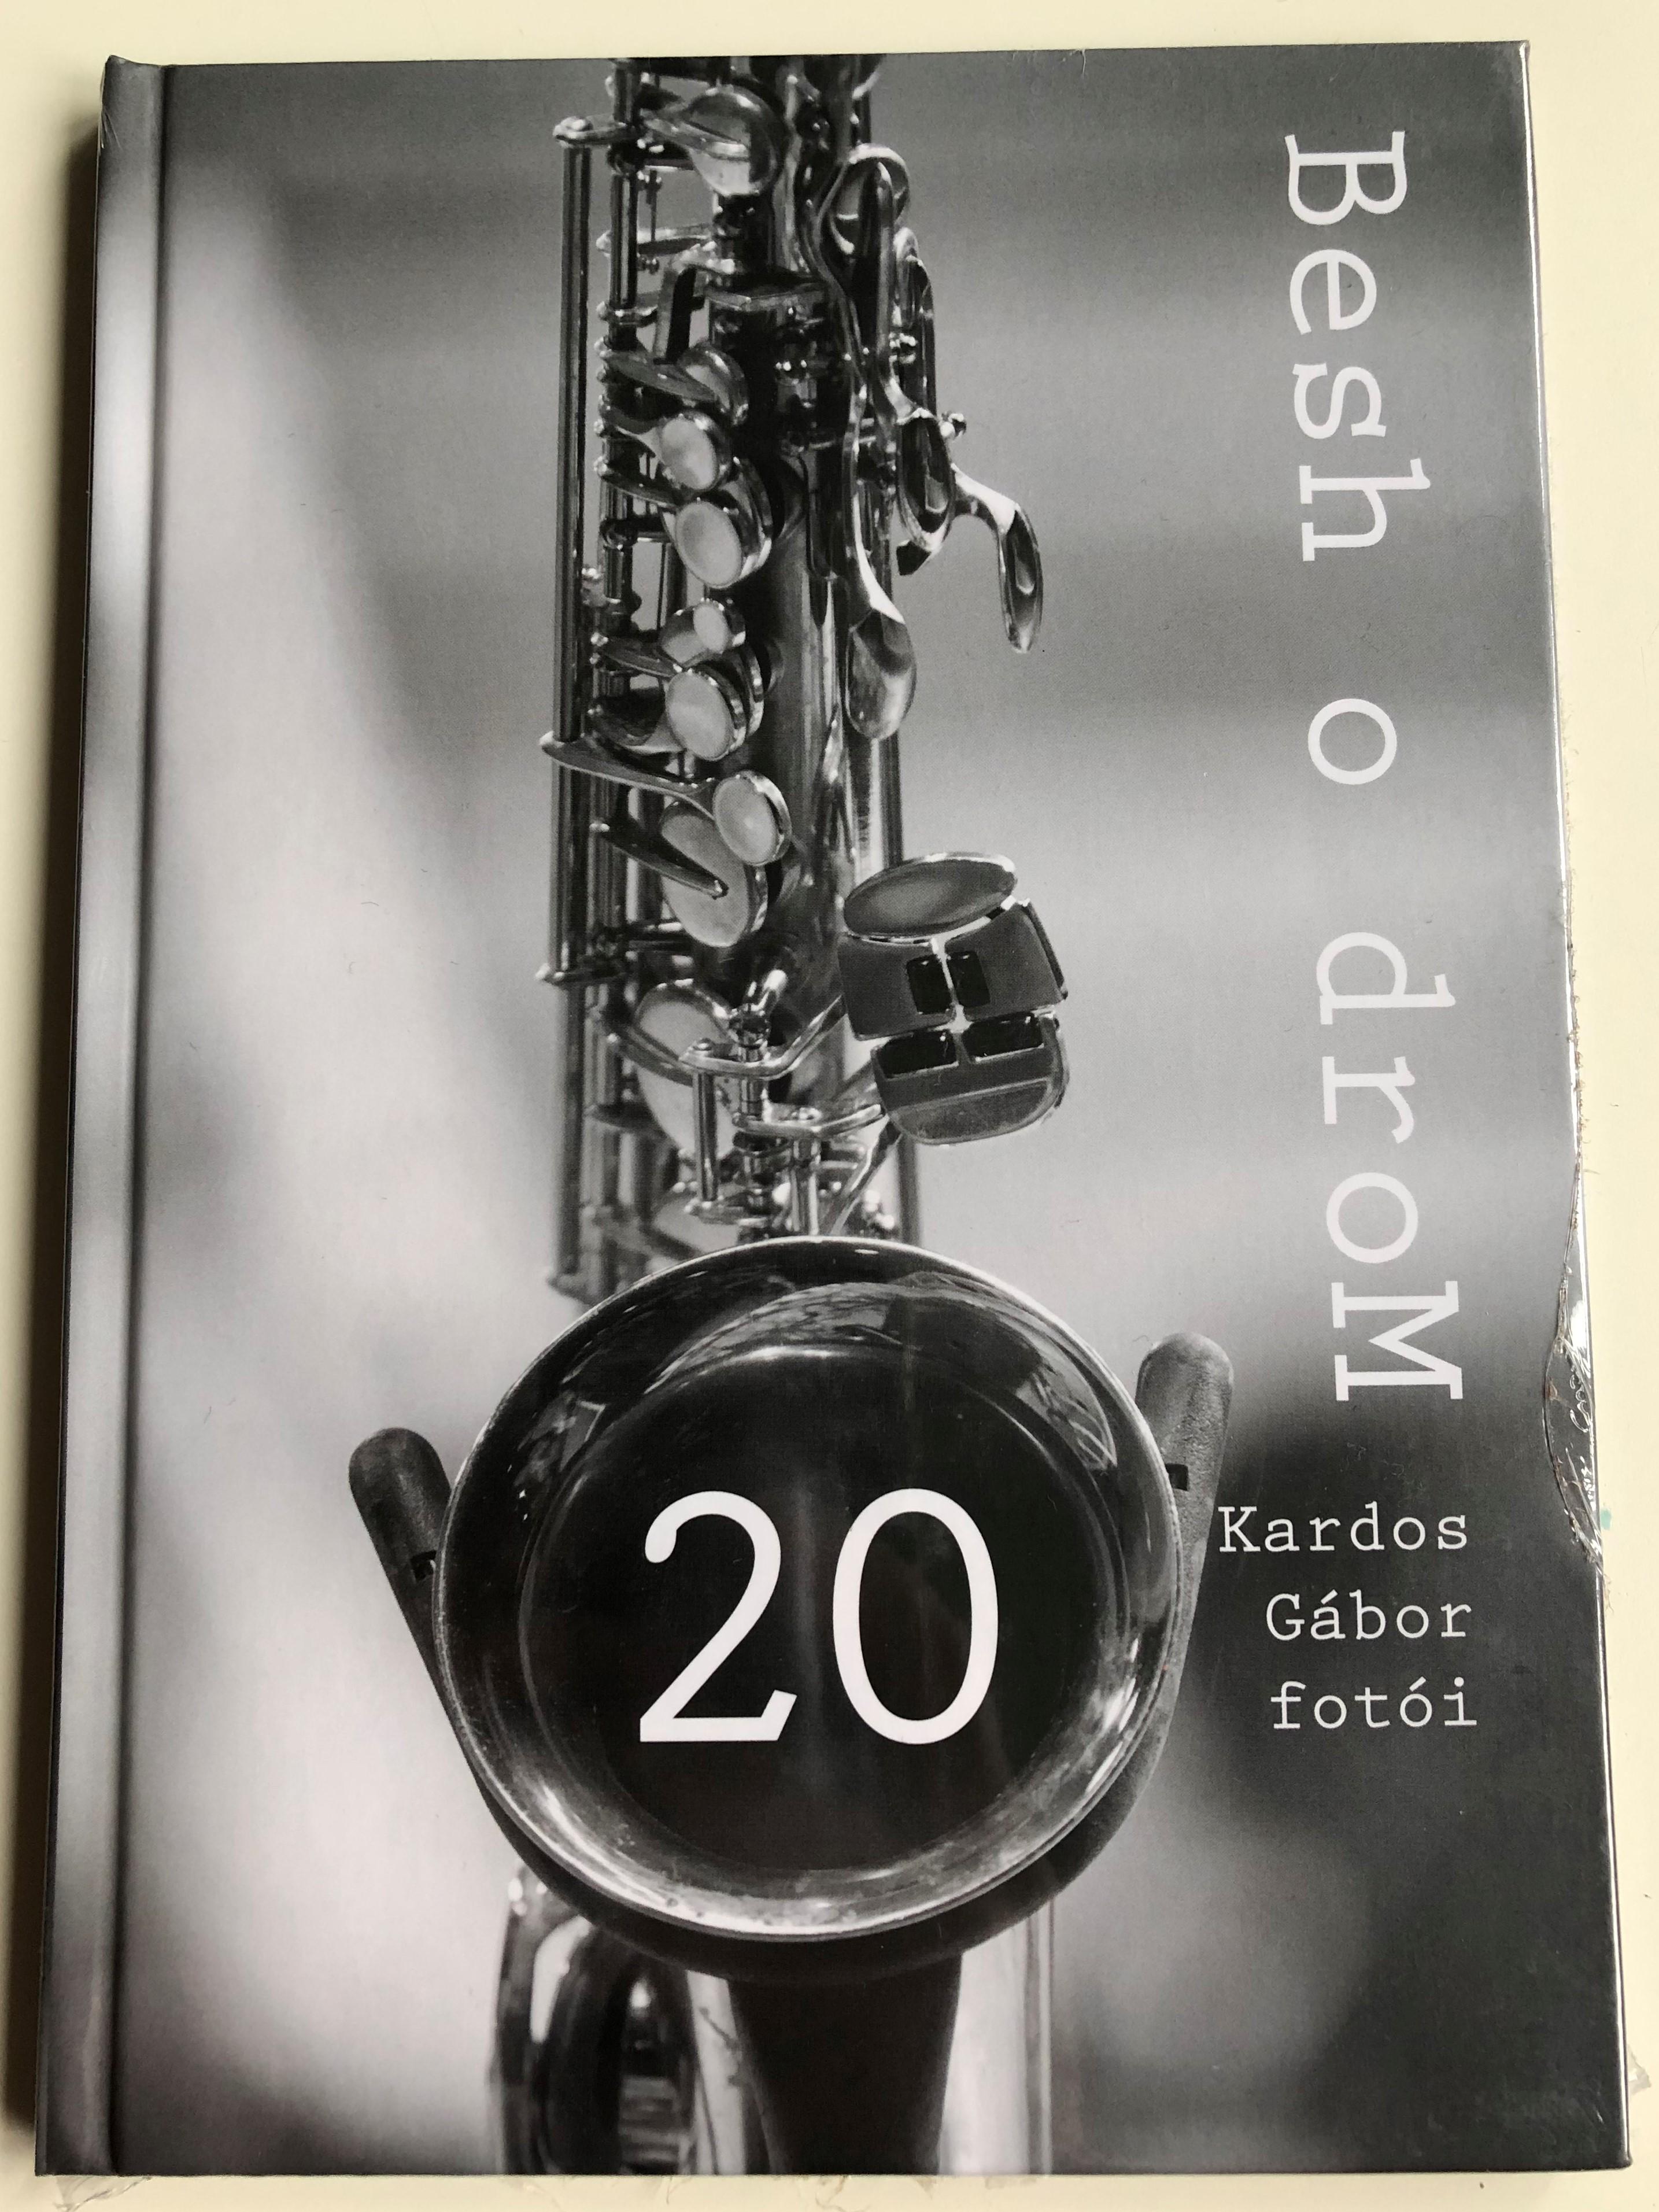 Besh o droM 20 - Kardos Gábor fotói / FA 446-2 / FONO Audio CD / Recorded  in Budapest, Bristol, Jerusalem / Atom Csocsek, Hilti turbó, Vaságy, Bál,  Kiskert - bibleinmylanguage